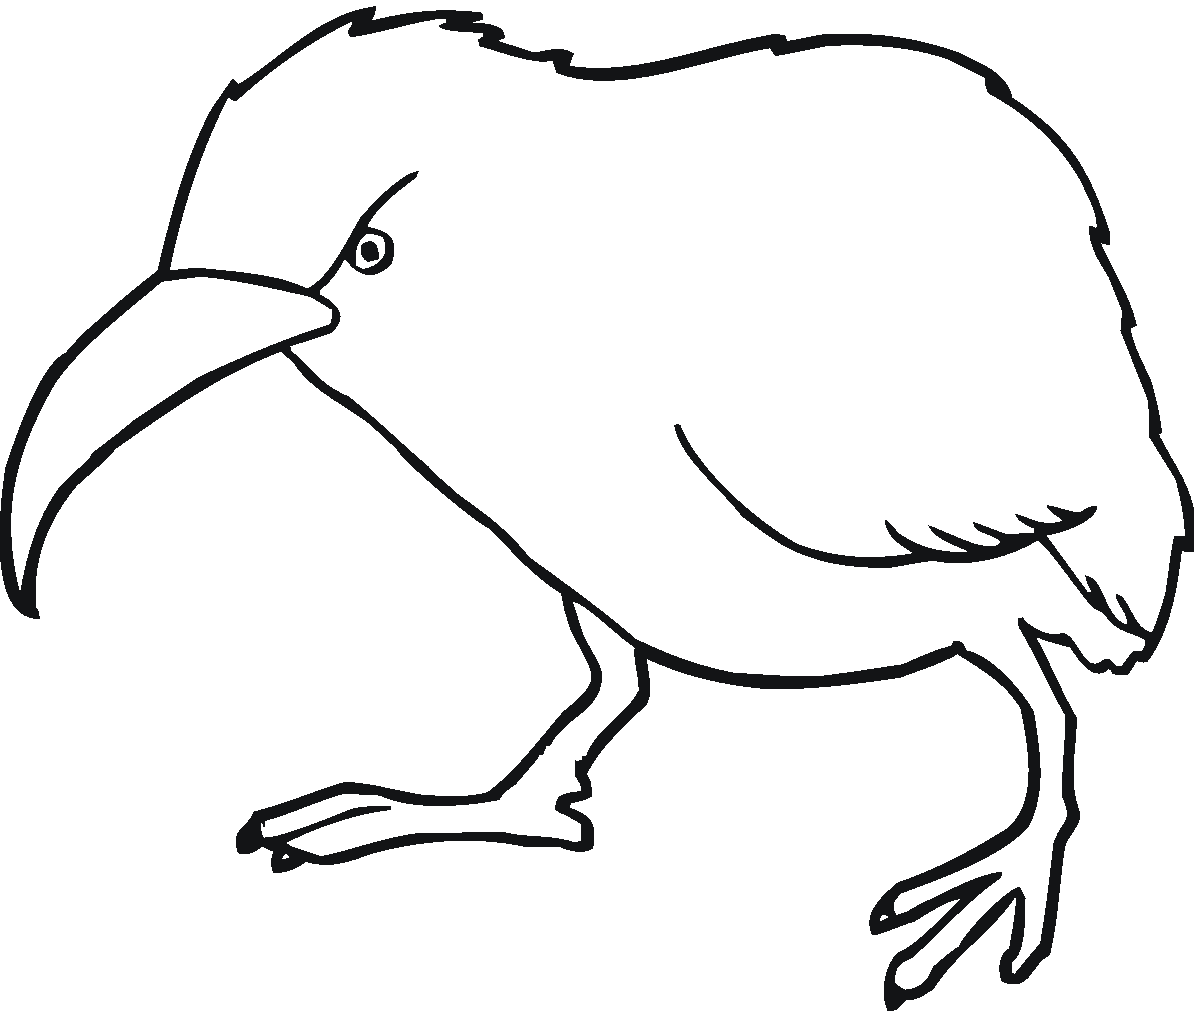 Kiwi Bird Clipart - ClipArt Best